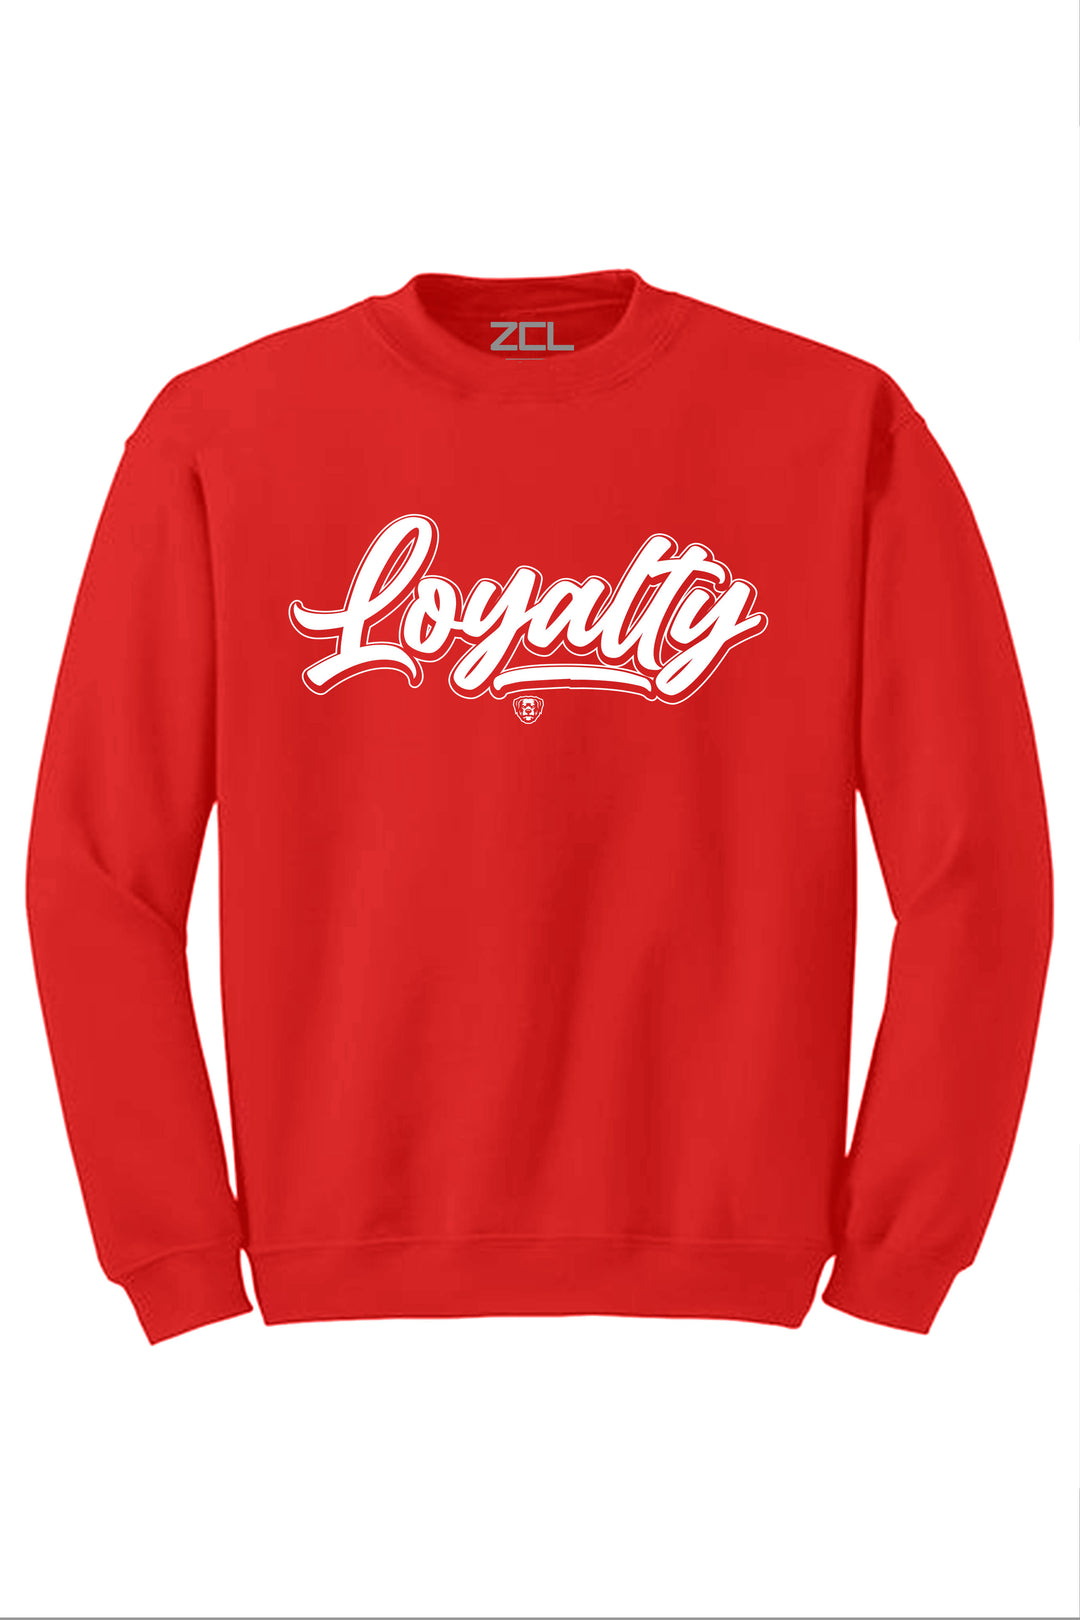 Loyalty Crewneck Sweatshirt (White Logo) - Zamage